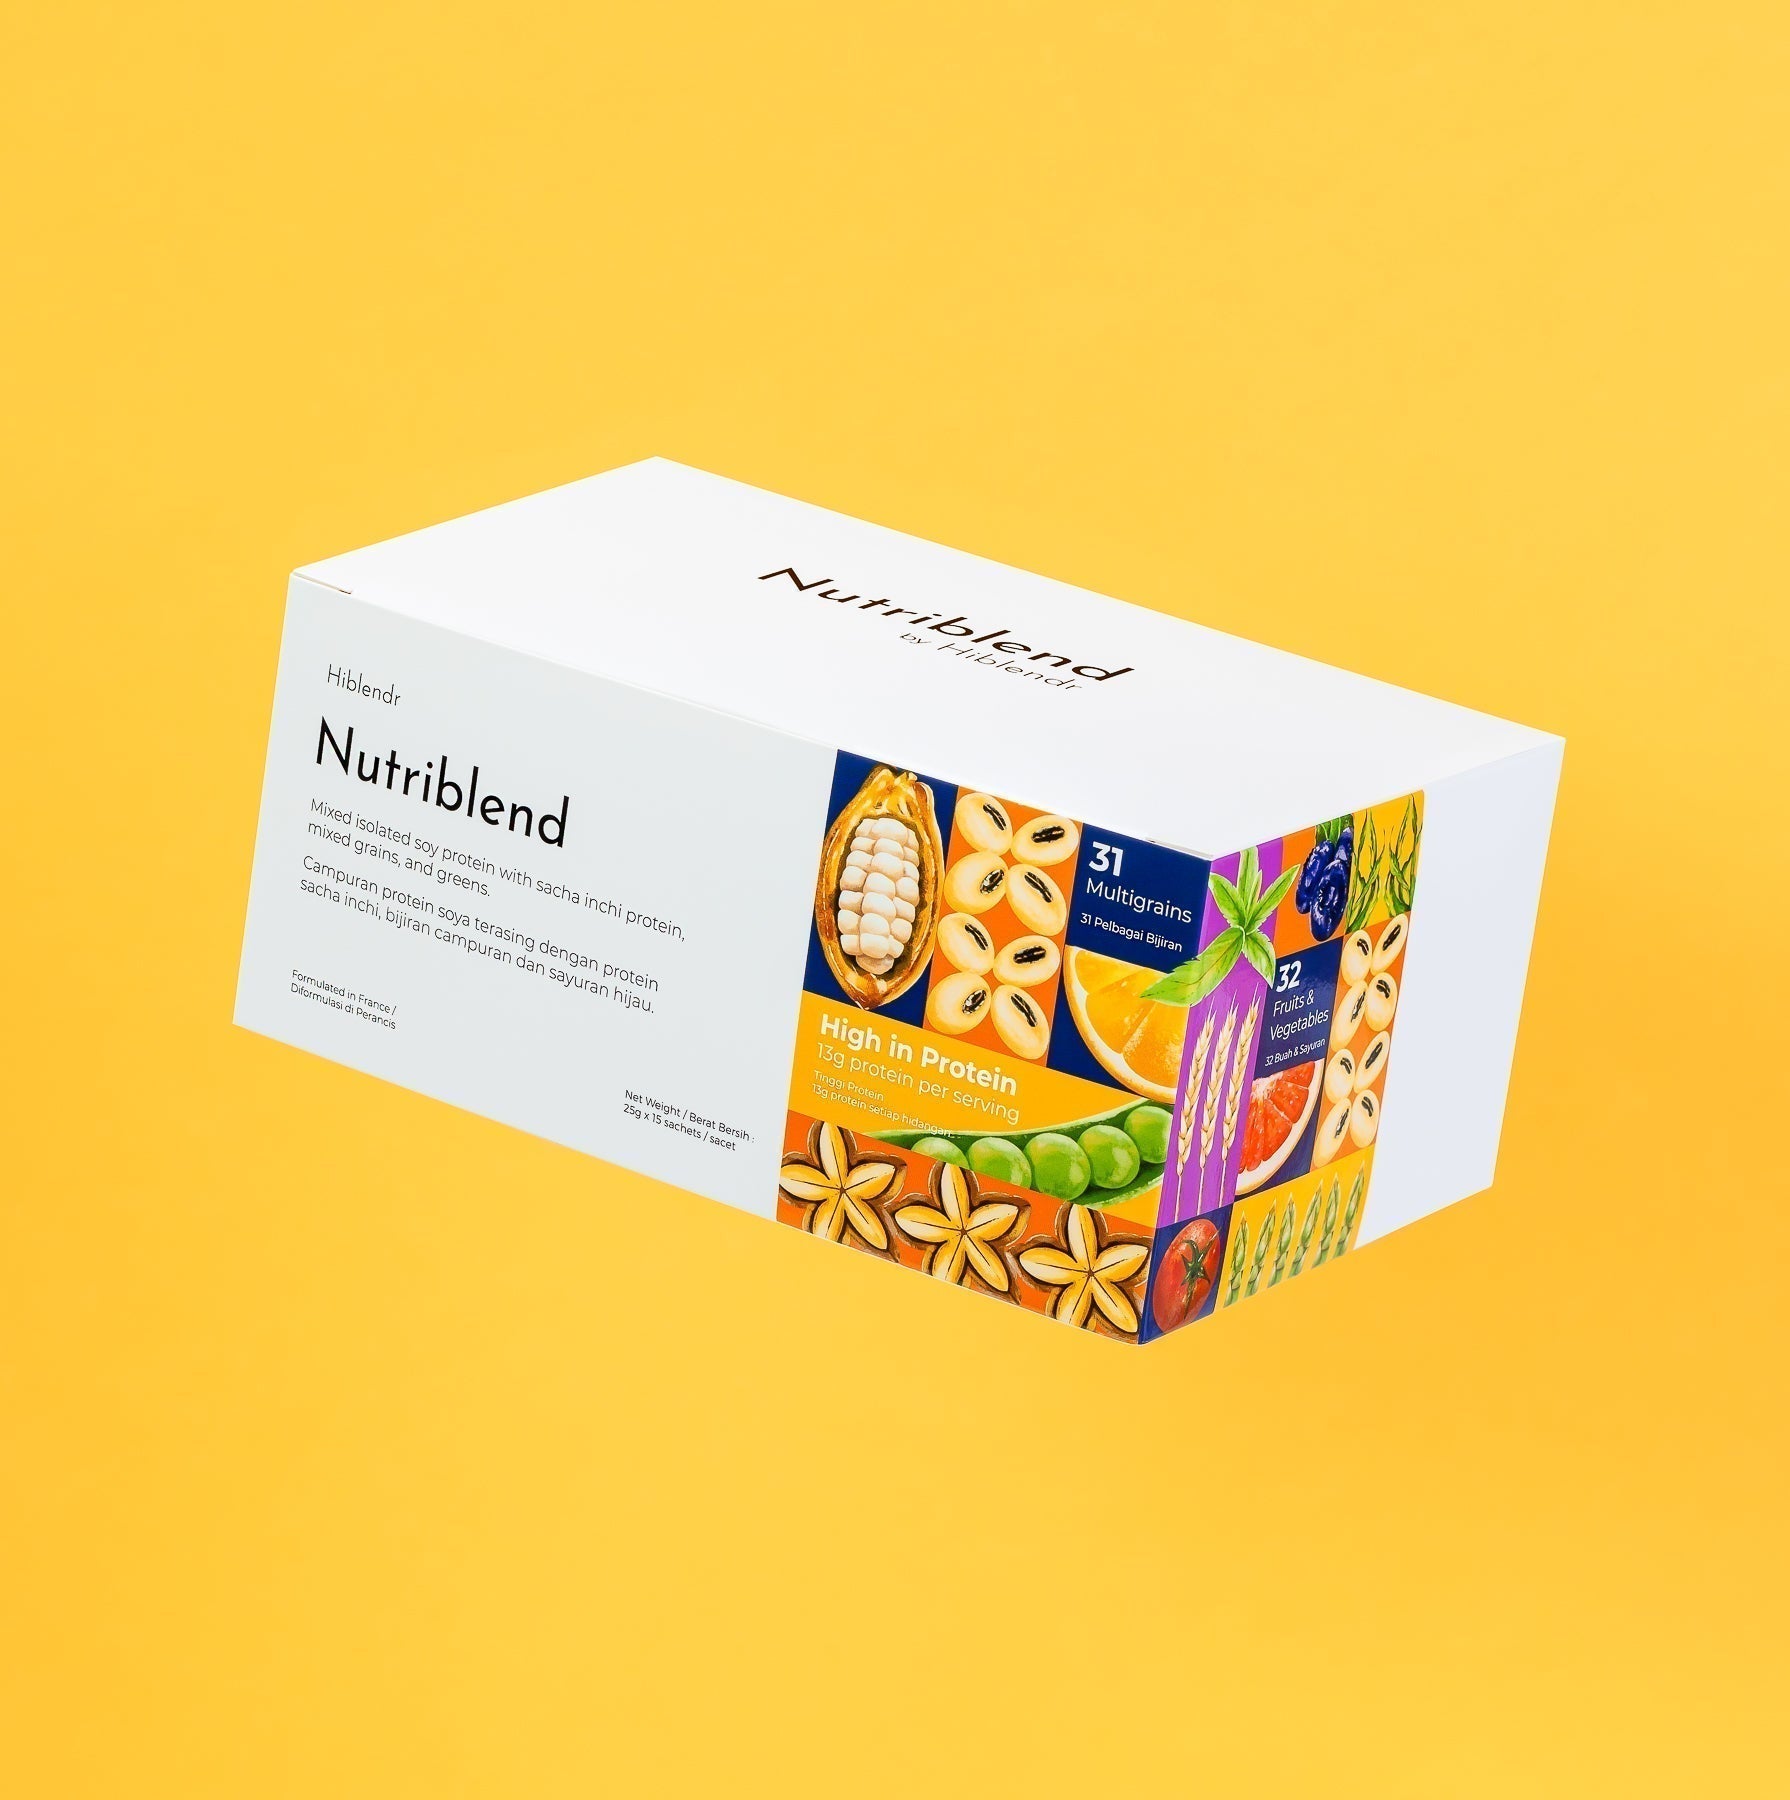 Nutriblend™ Superfood Meal Replacement (Bundle) - HiBlendr